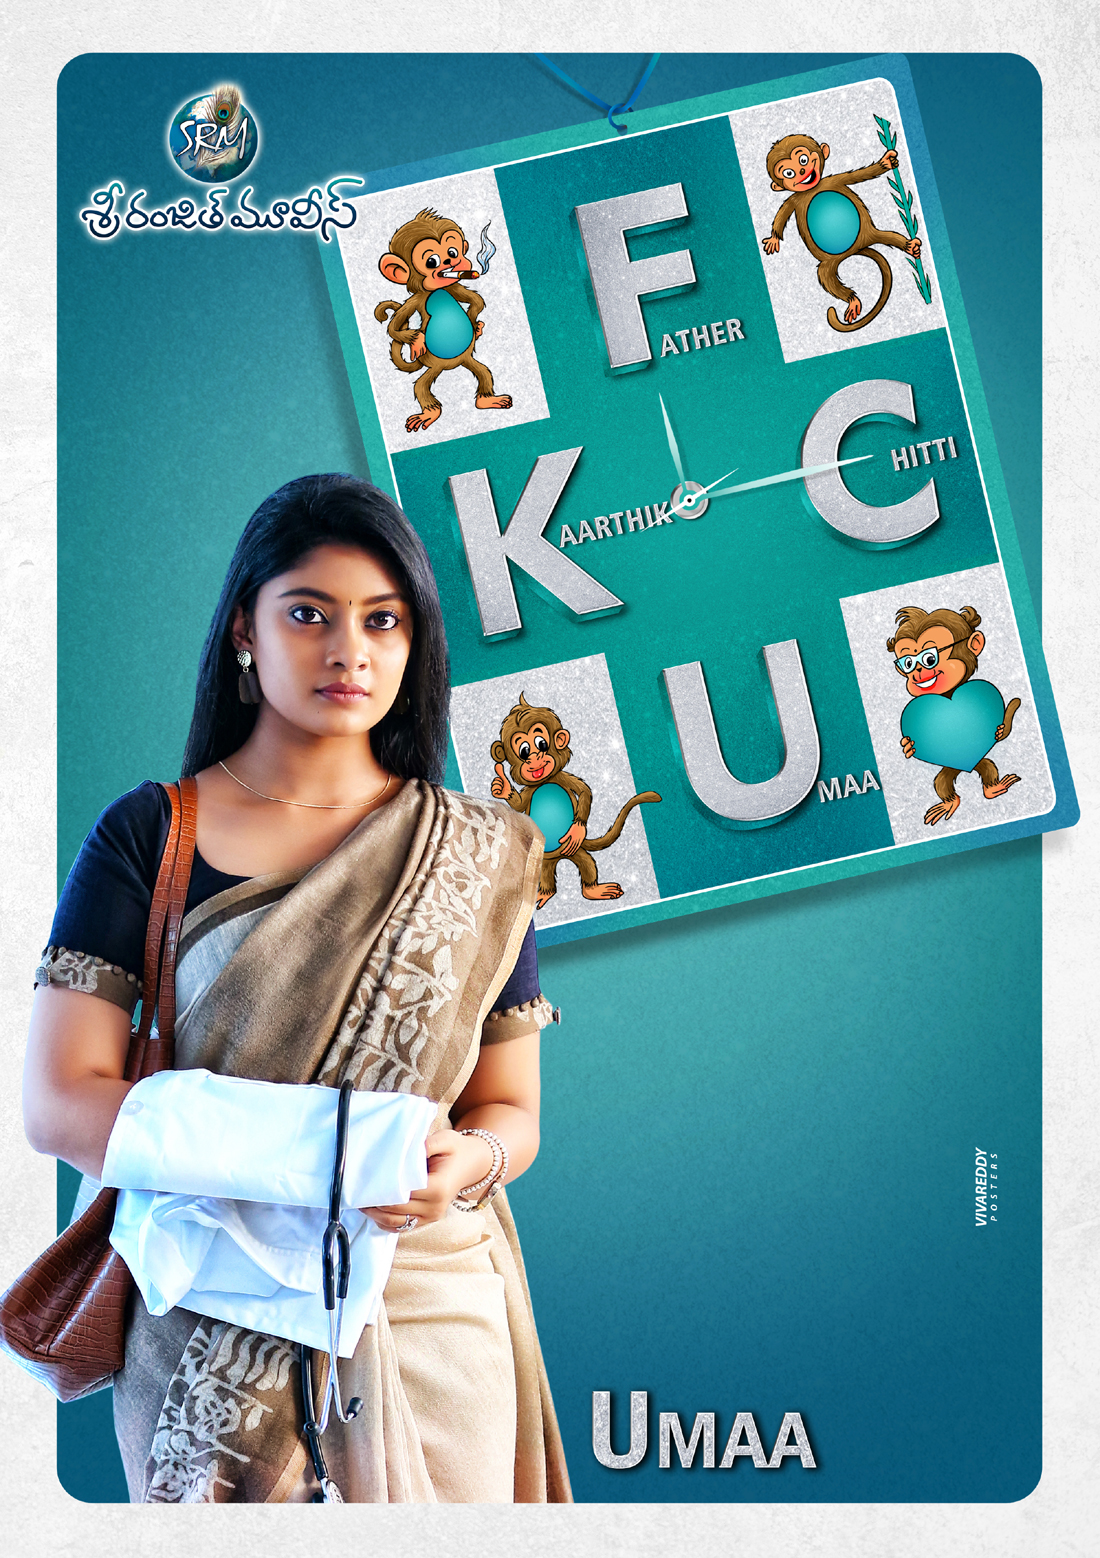 Saharshitha has now finally revealed the heroine of the FCUK movie.